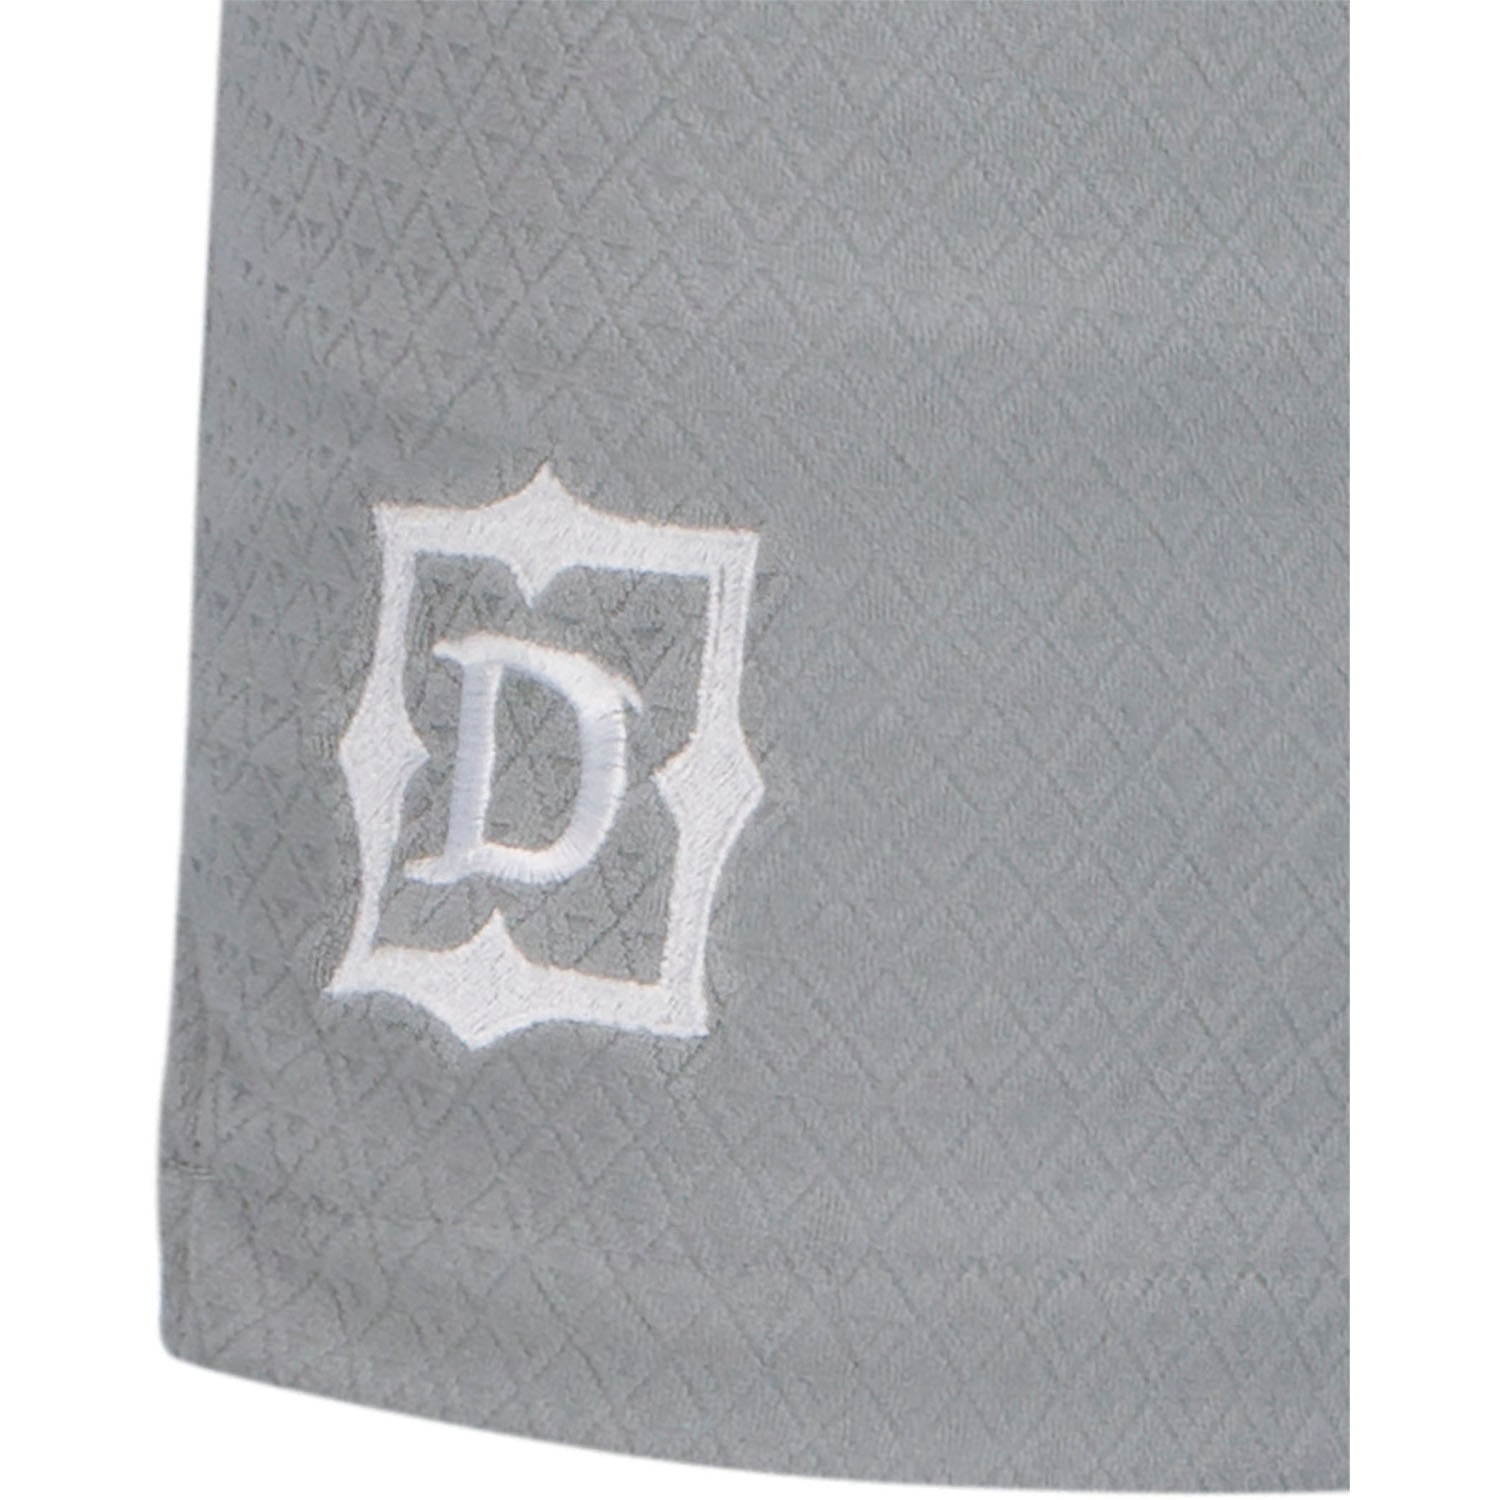 Diablo Point3 Grey Shorts - "D" Logo Close Up View